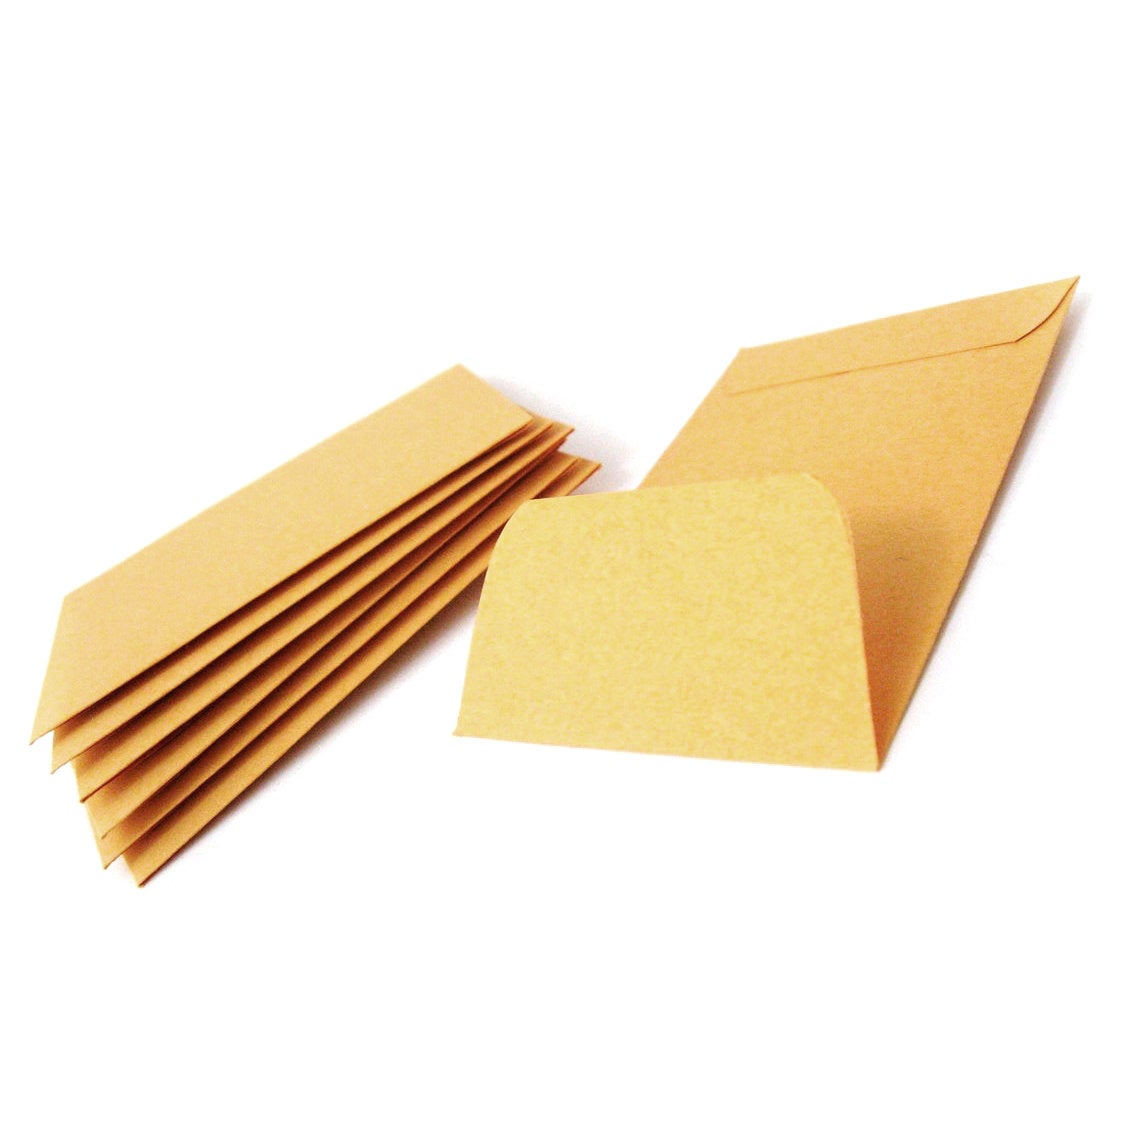 10 Kraft Envelopes - Eco friendly paper envelopes